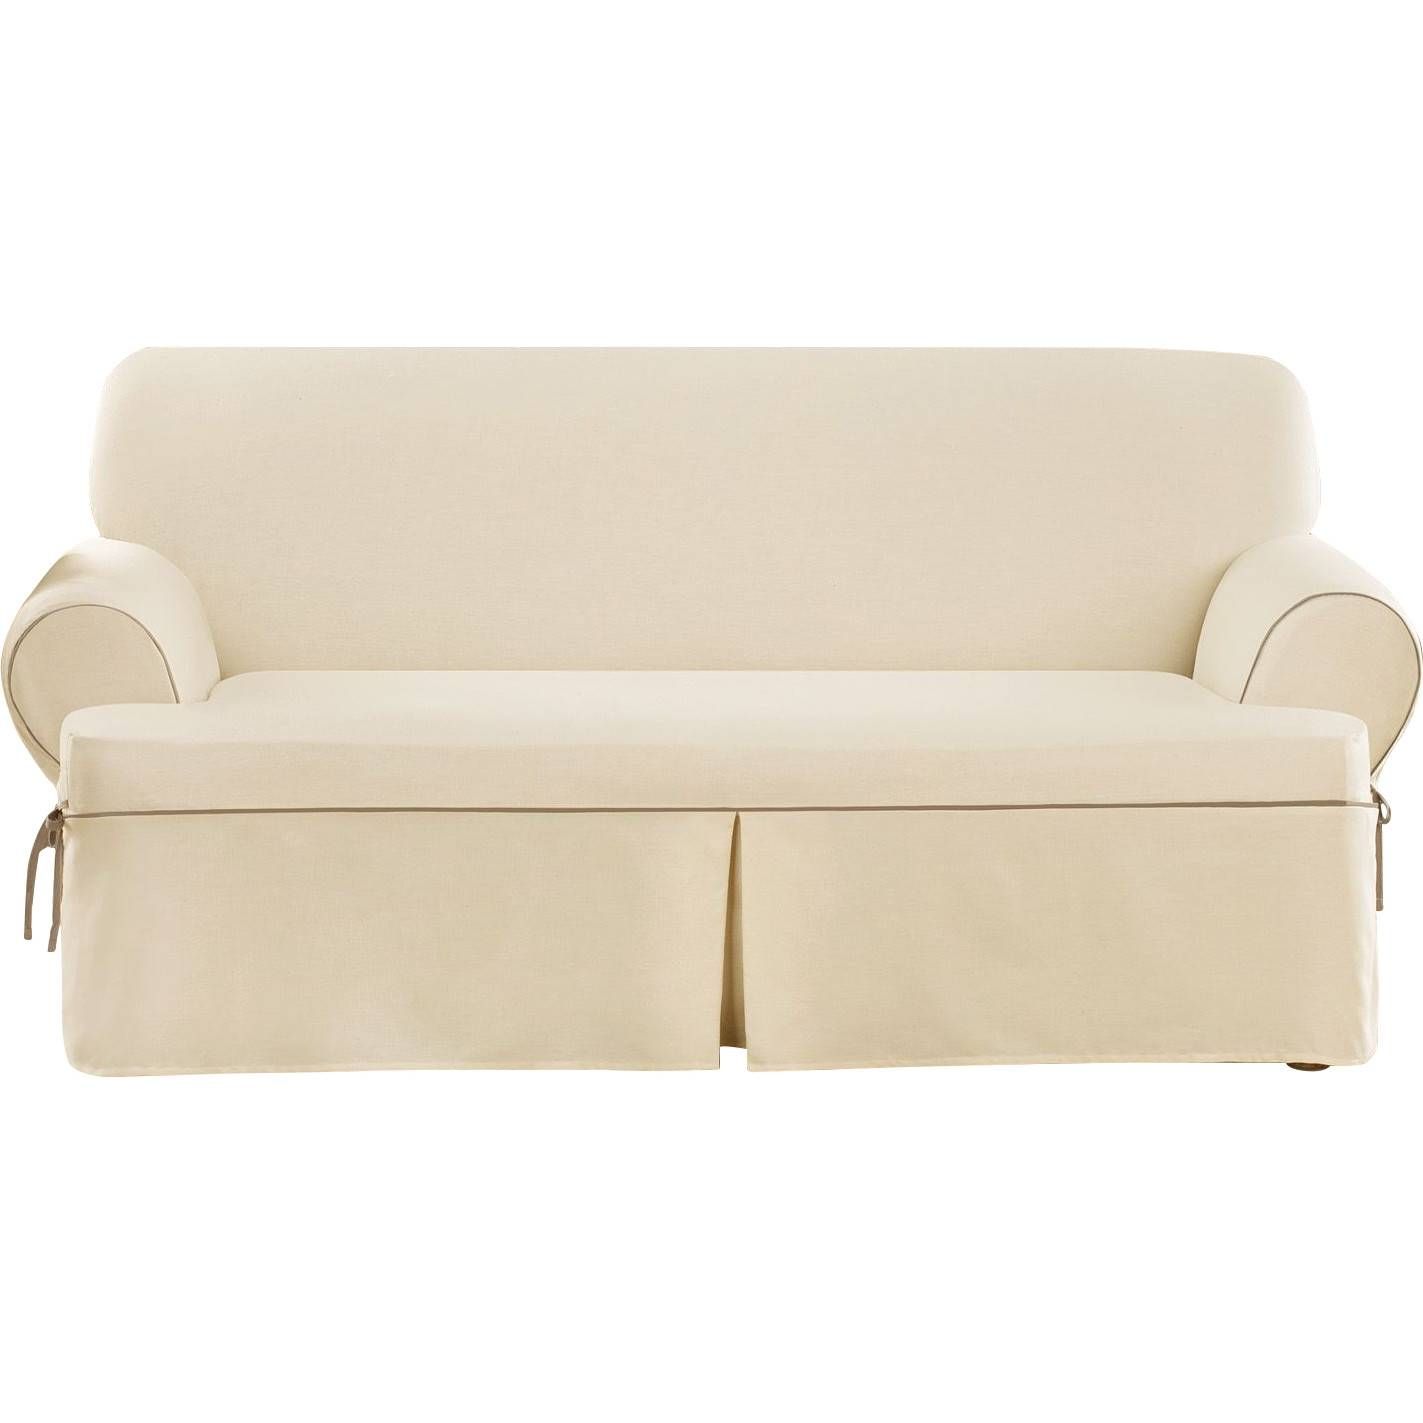 Furniture & Sofa: T Cushion Sofa Slipcover | Surefit Couch Covers Inside T Cushion Slipcovers For Large Sofas (View 1 of 15)